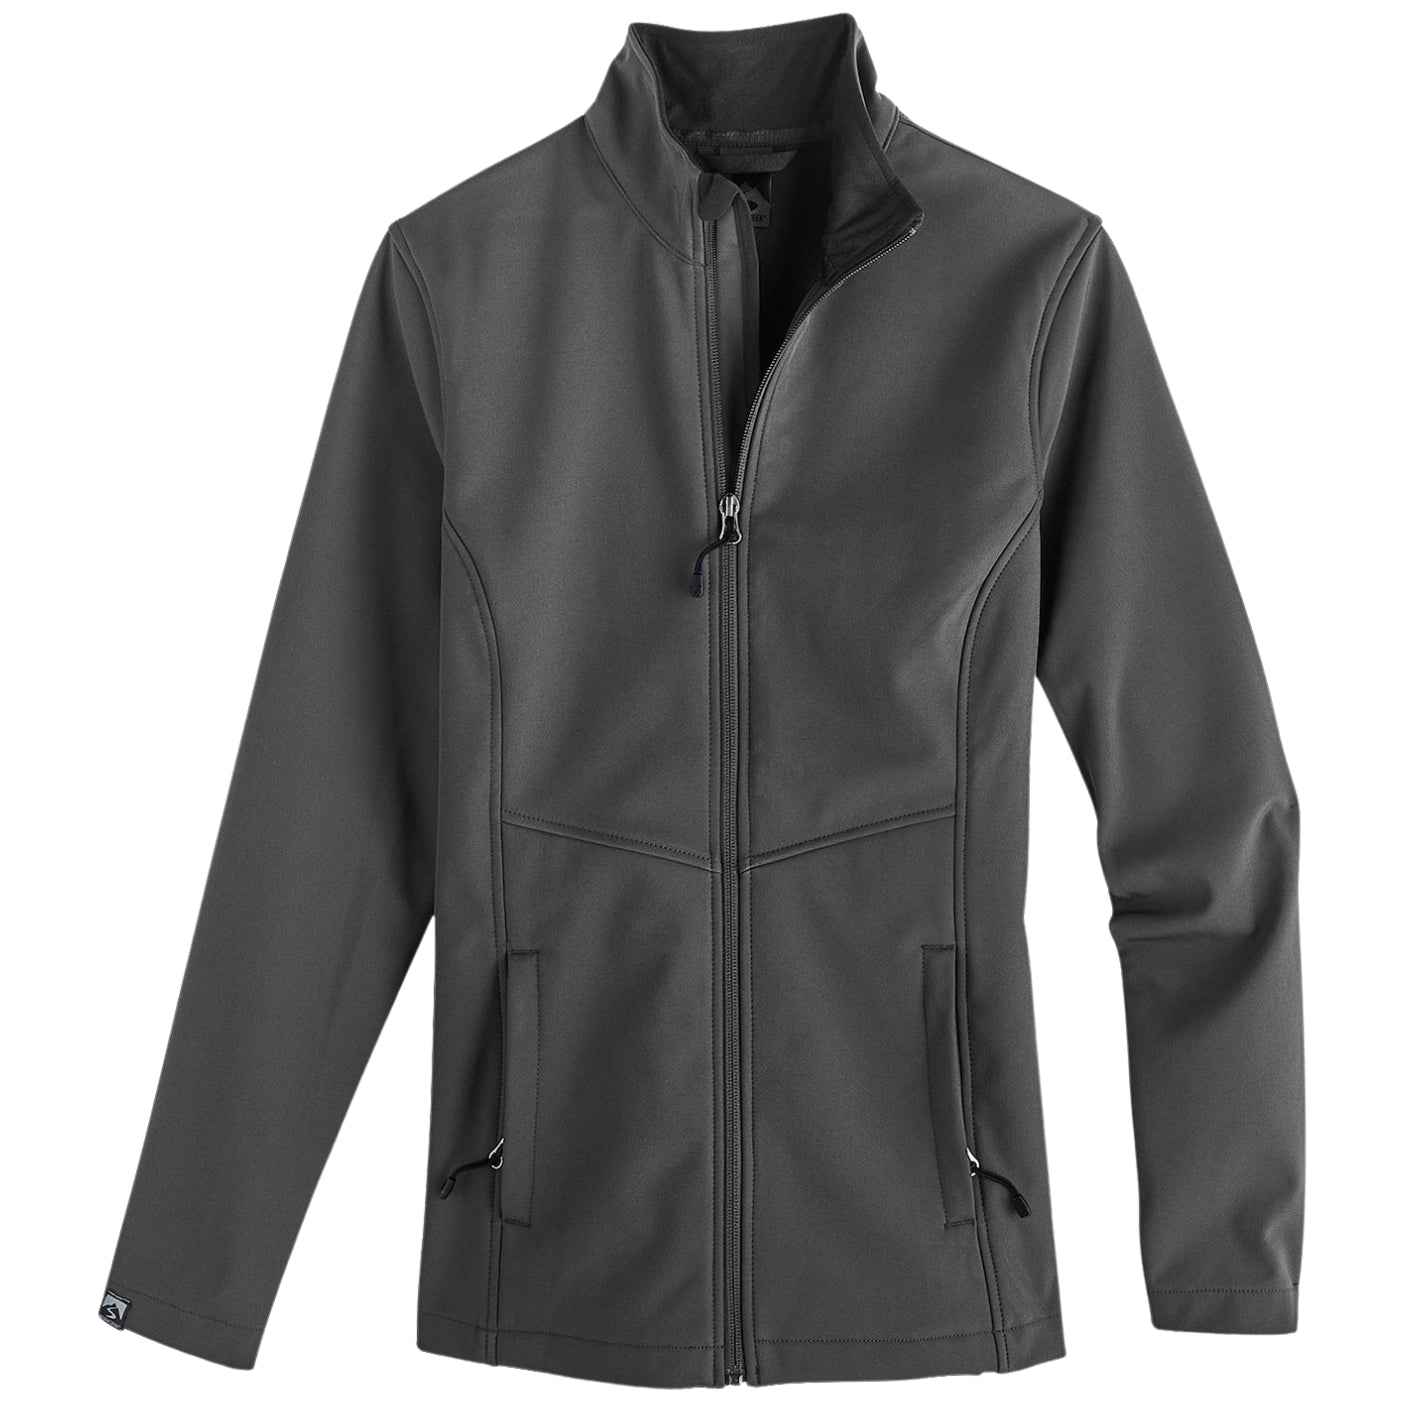 Customizable Storm Creek women's Trailblazer recycled polyester jacket in jet black.